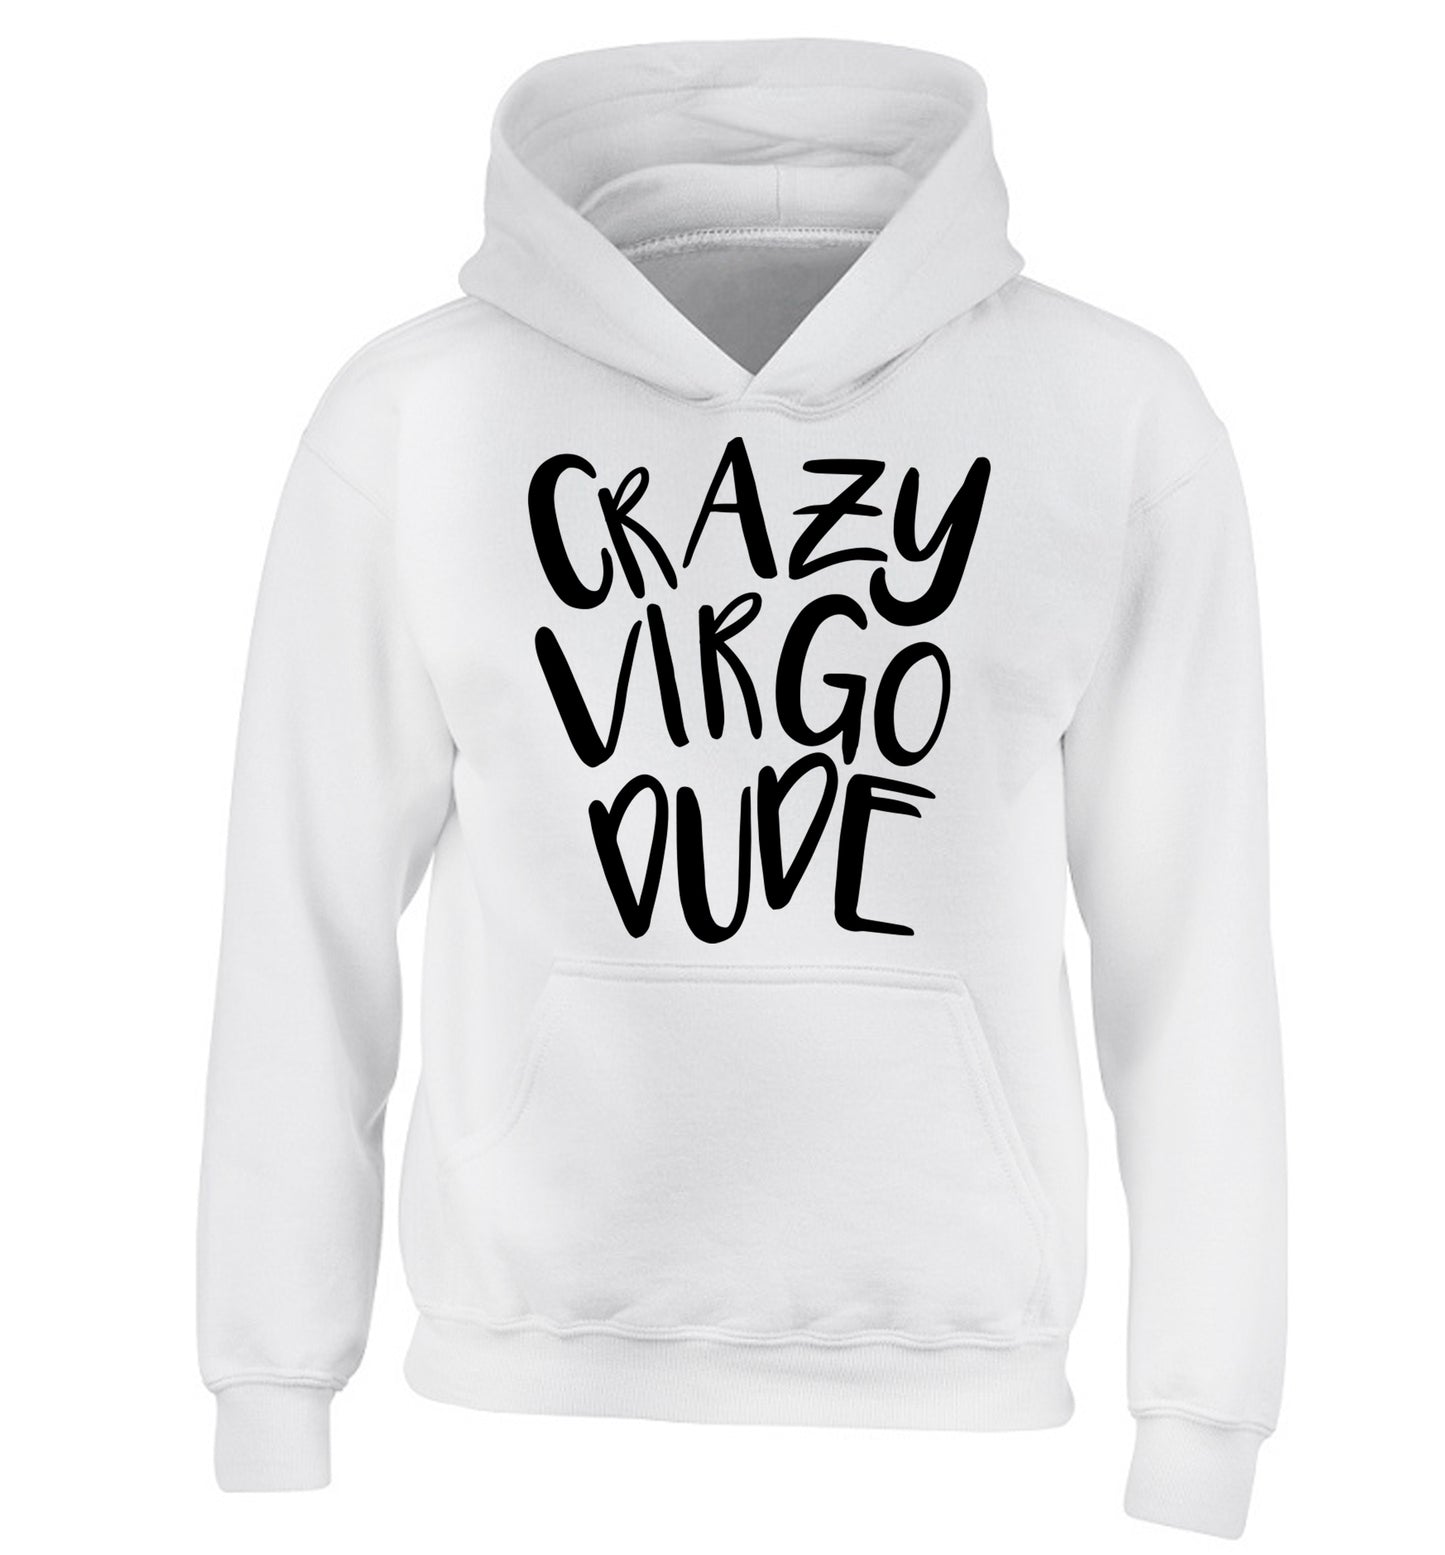 Crazy virgo dude children's white hoodie 12-13 Years